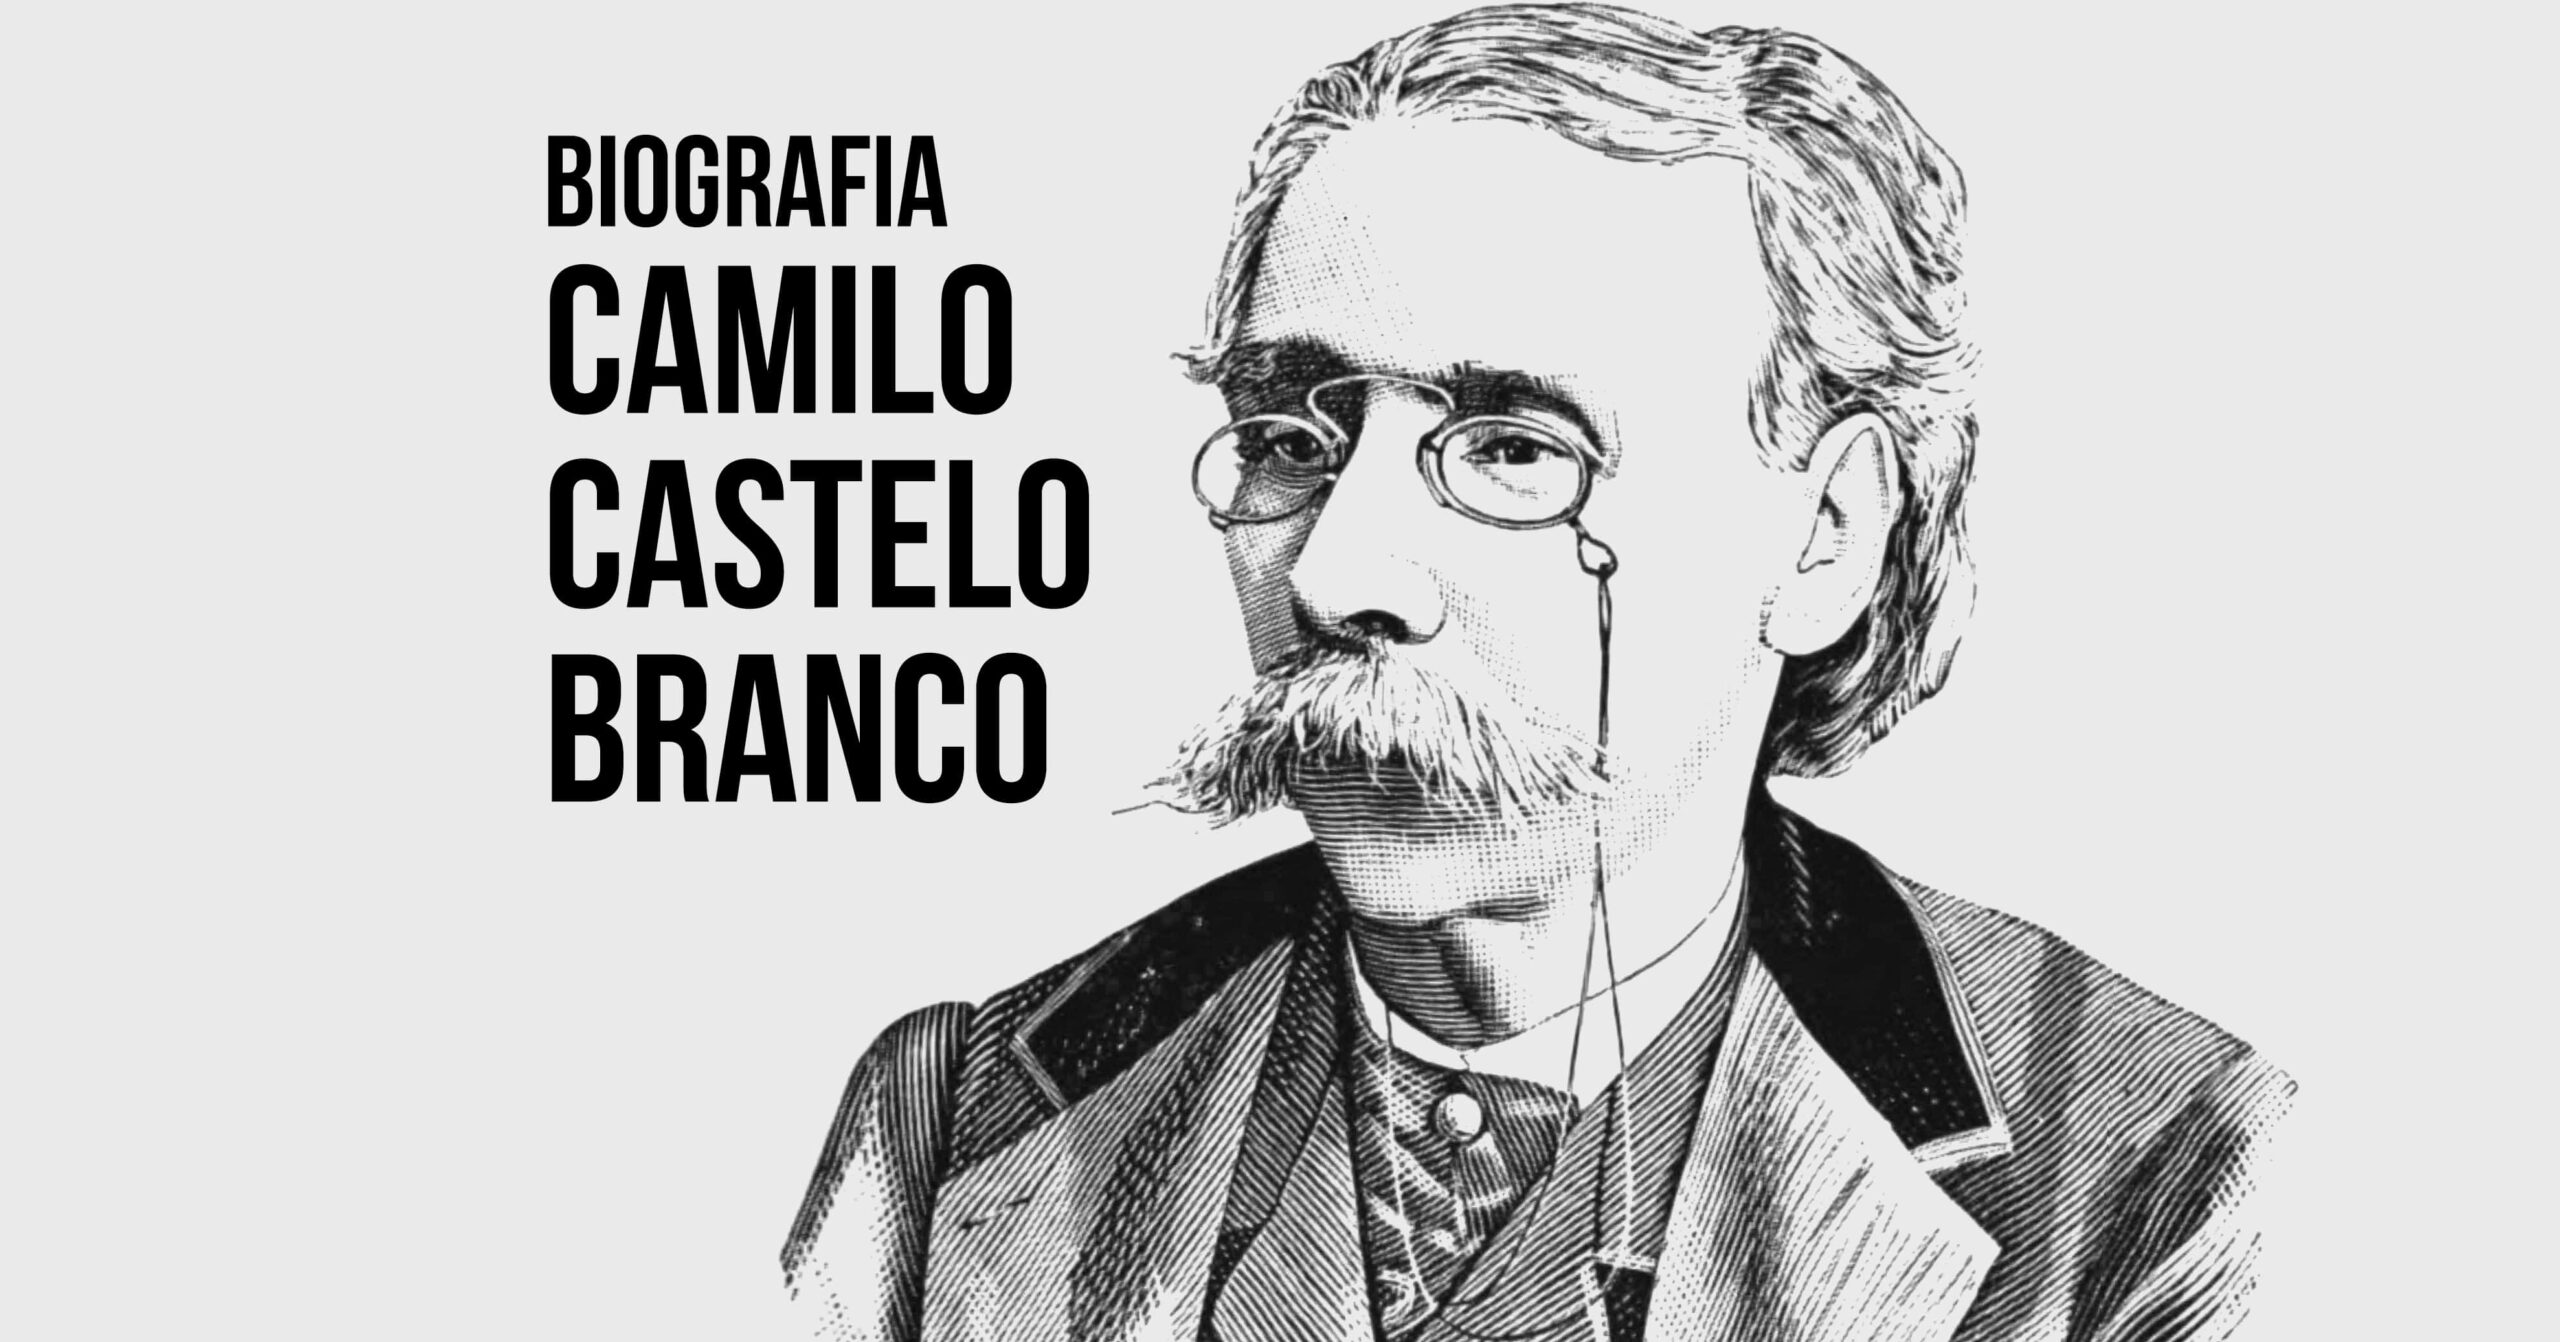 Camilo Castelo Branco